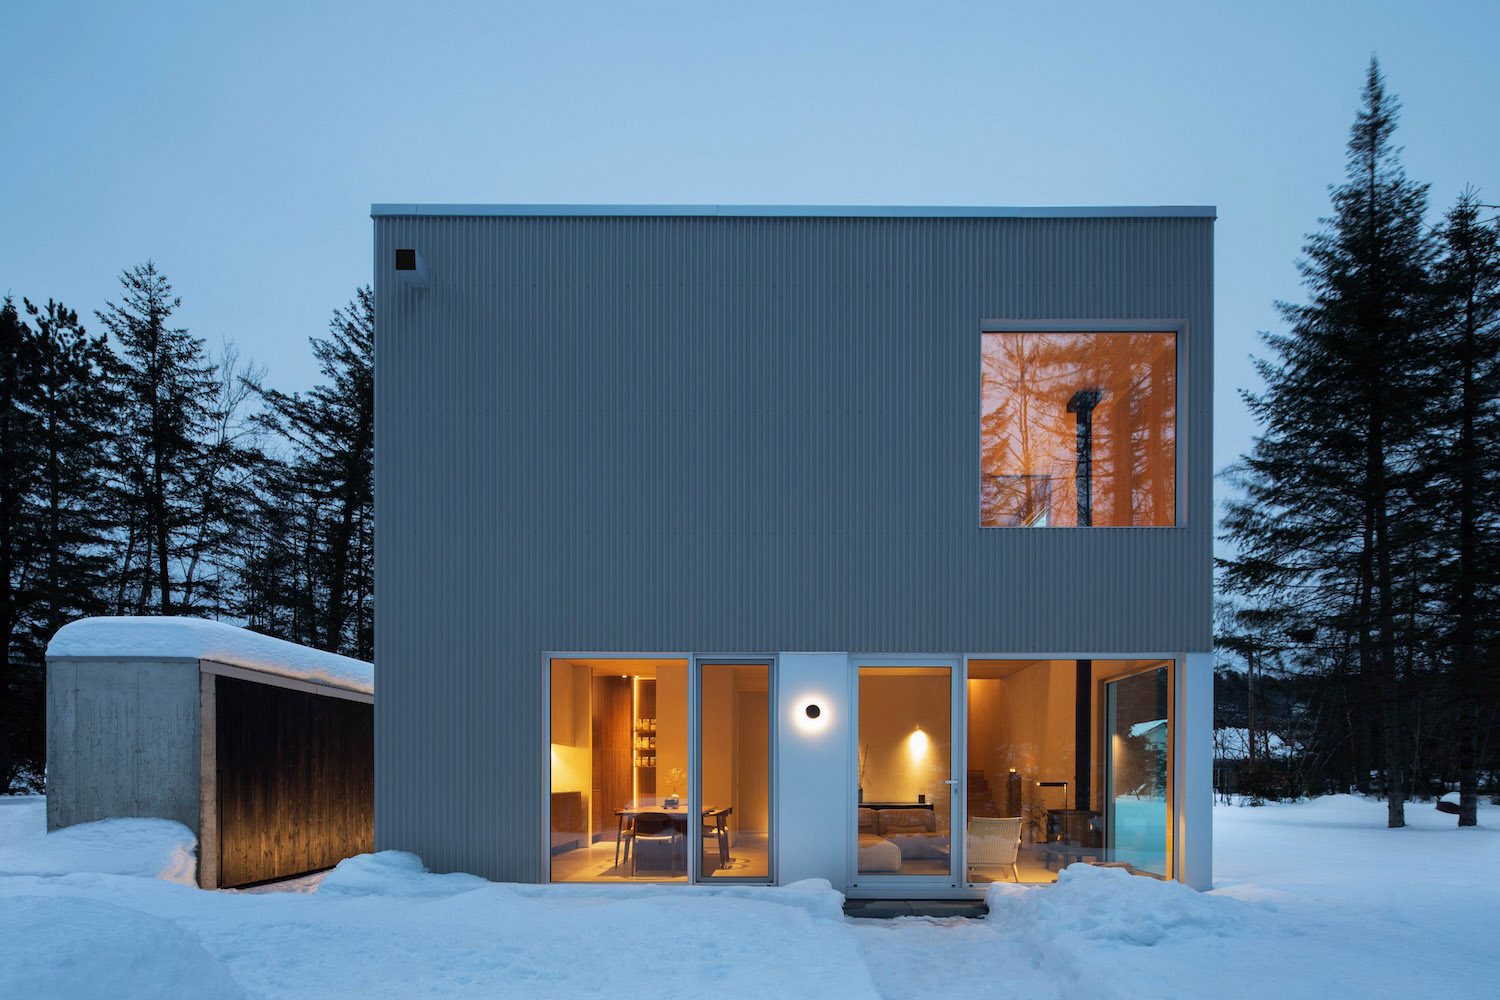 Maurice Martel architecte,别墅设计,度假屋设计,度假木屋别墅设计,加拿大,别墅设计案例,别墅设计方案,极简主义,极简风格